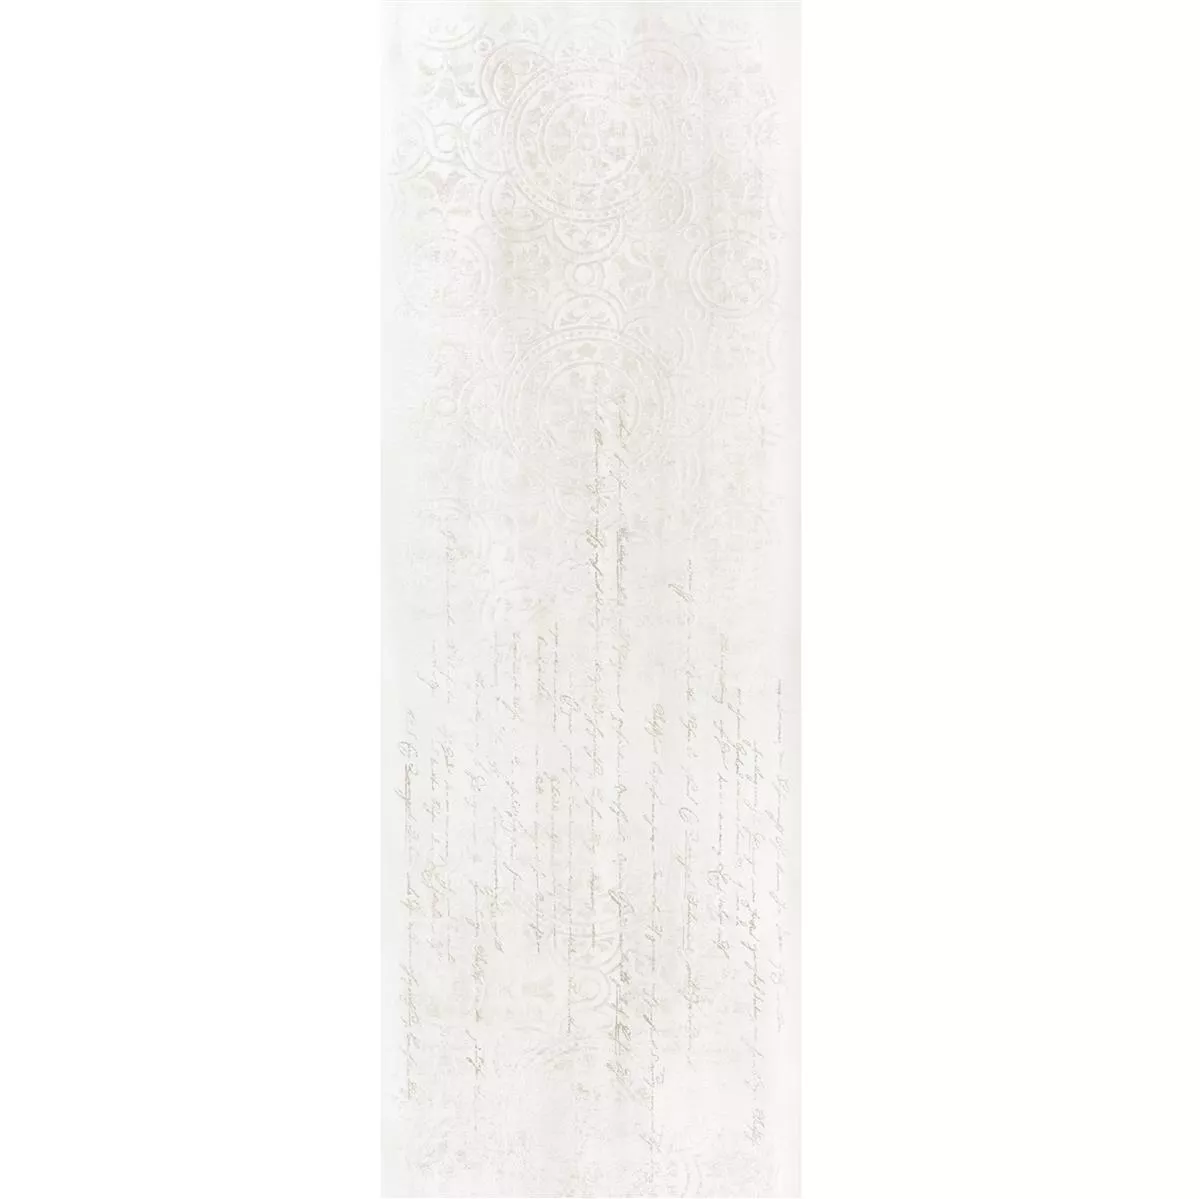 Zidne Pločica Anderson Prirodni rub 30x90cm Bež Dekoracija